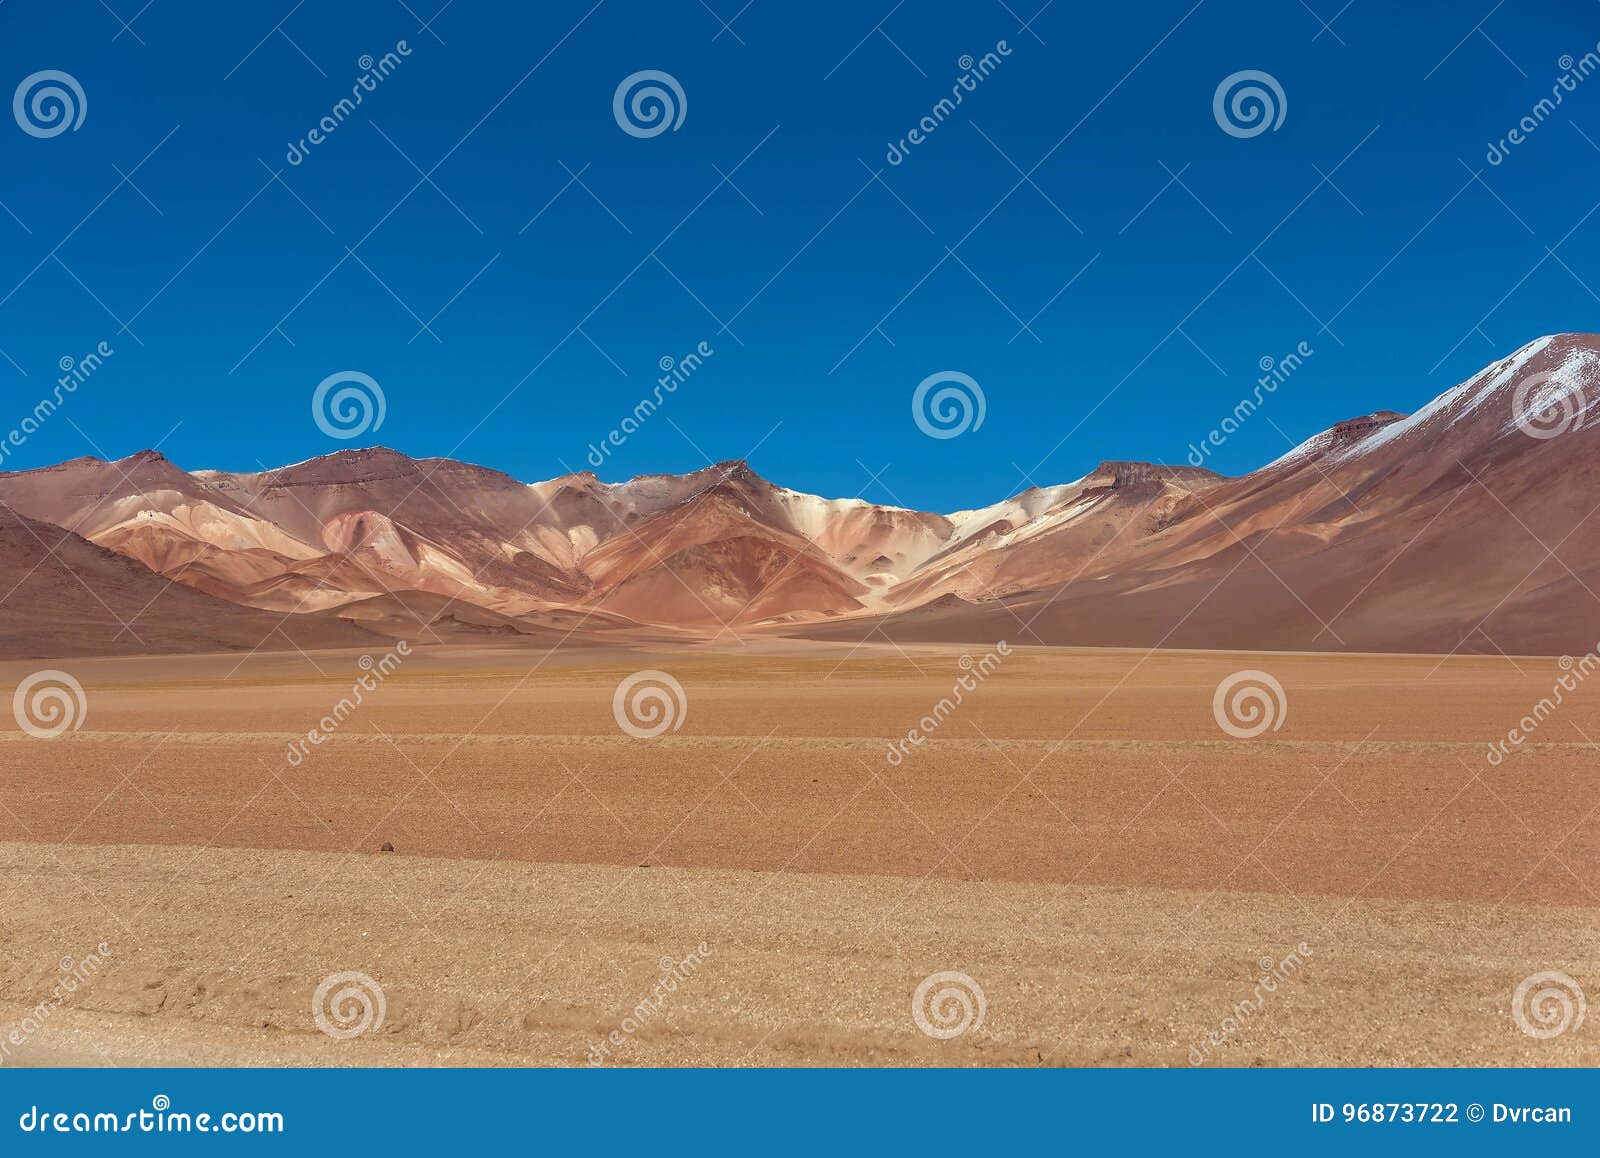 dali desert in national reserve park eduardo avaroa, bolivia